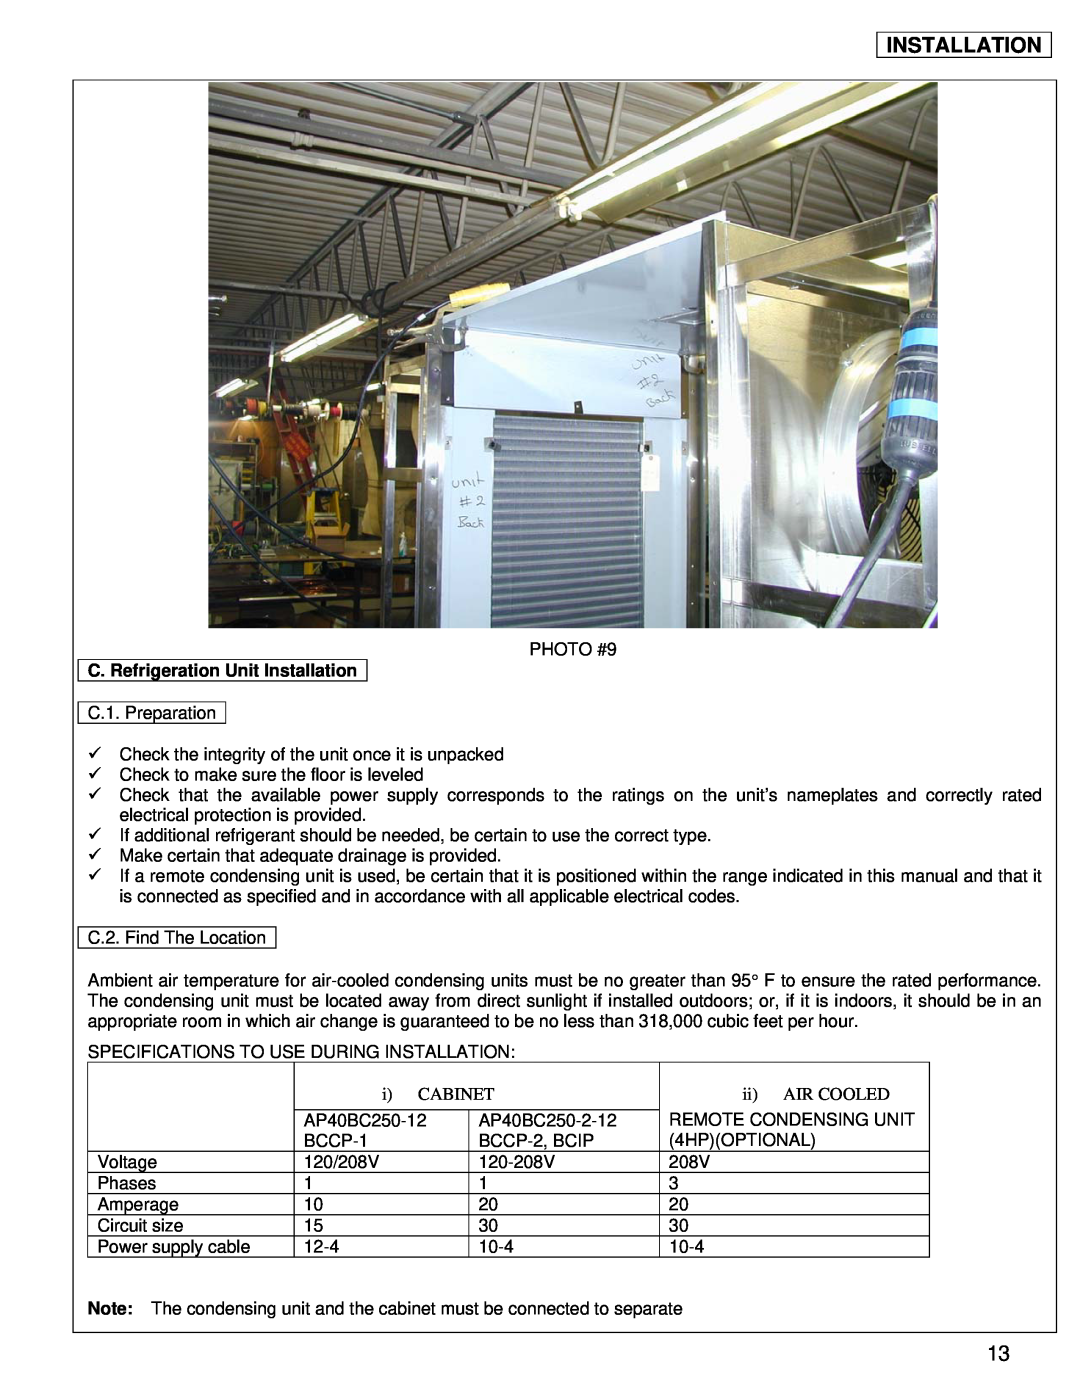 American Panel BCCP-1, BCIP, BCCP-2, AP40BC250-2-12 manual C. Refrigeration Unit Installation, i CABINET, ii AIR COOLED 